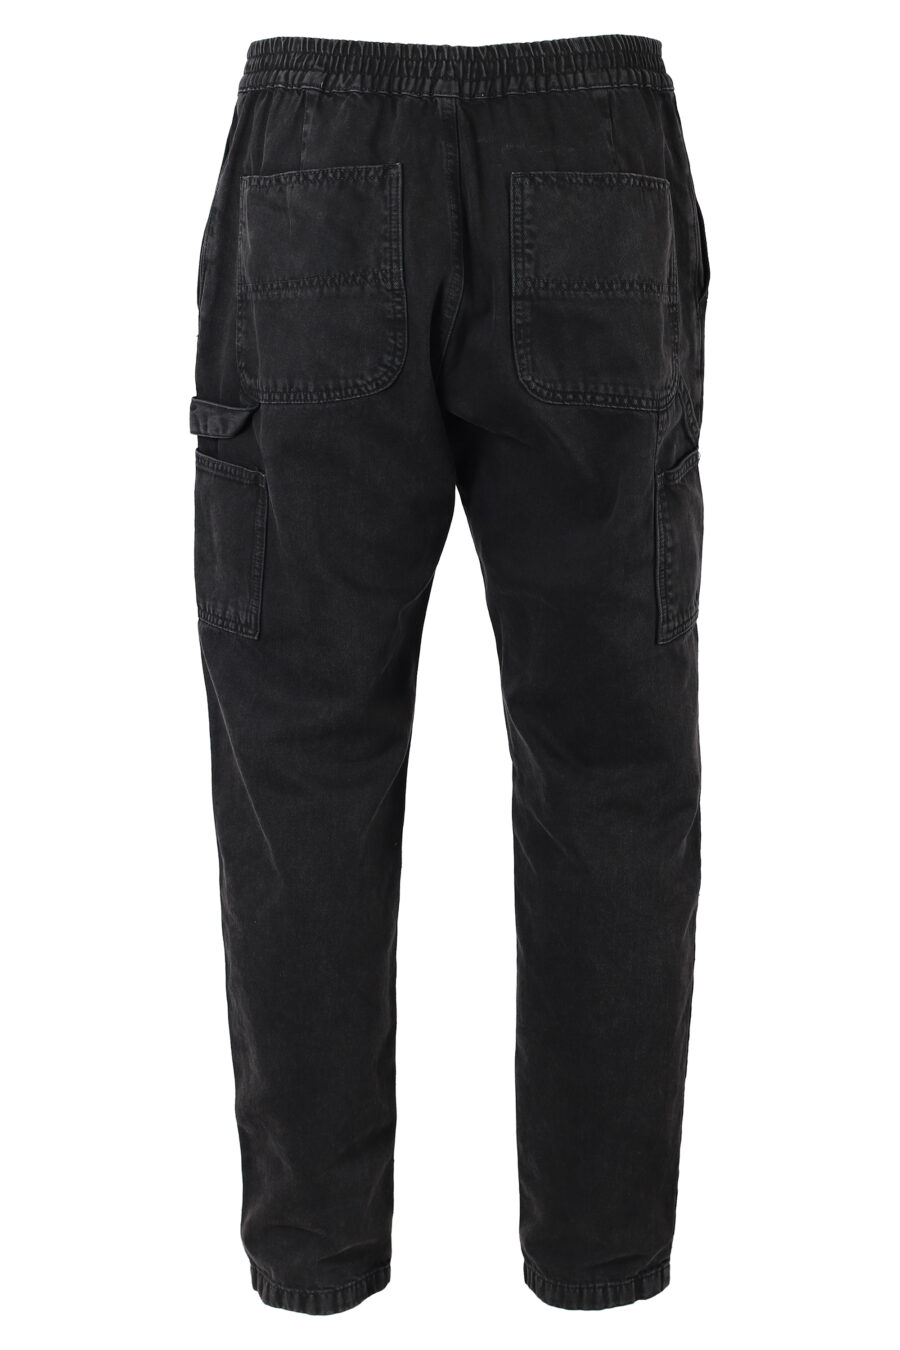 Schwarze Denim-Hose mit einfarbigem Mini-Logo - IMG 9880